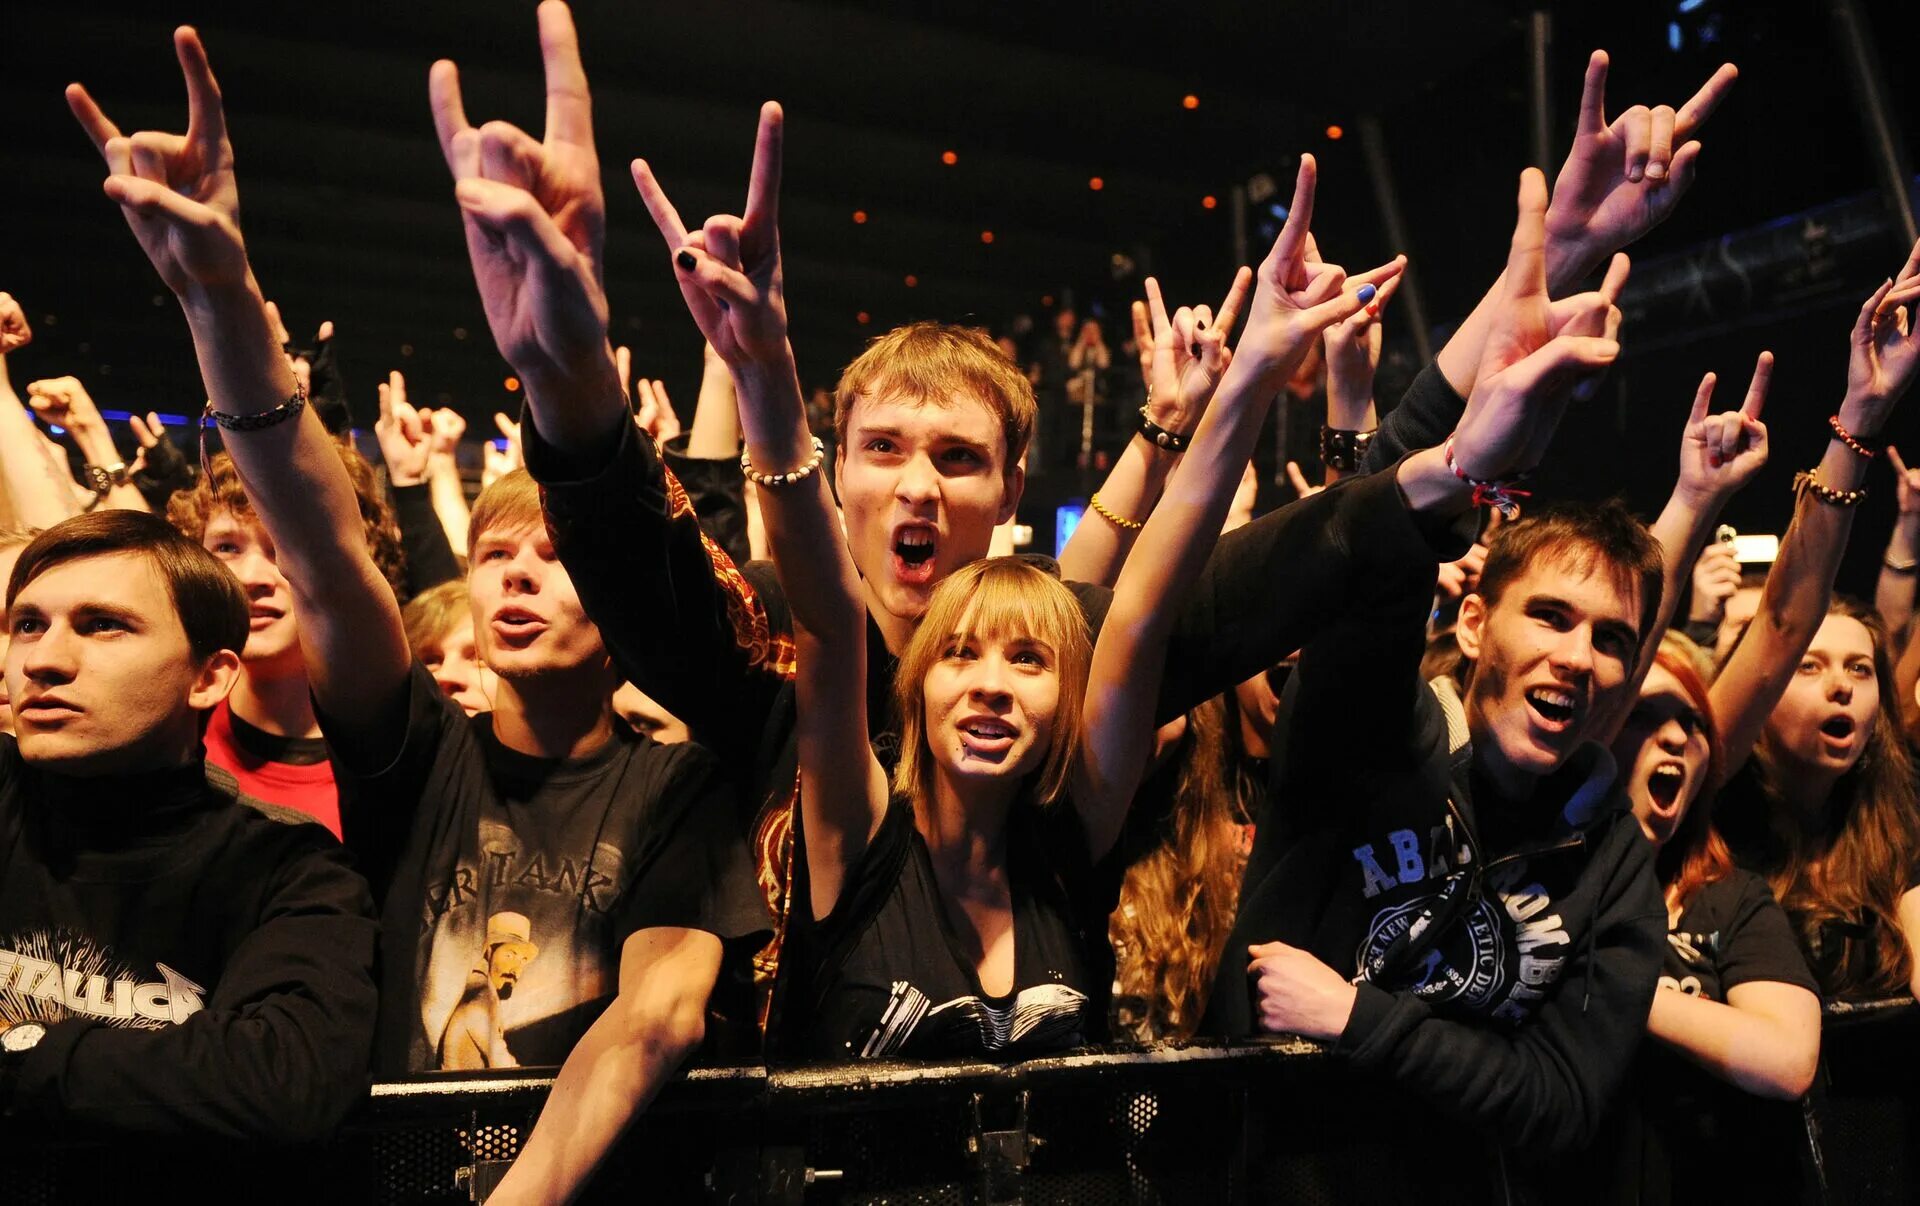 Рок концерт. Молодежь на концерте. Рок концерт зрители. Фанаты музыкантов.